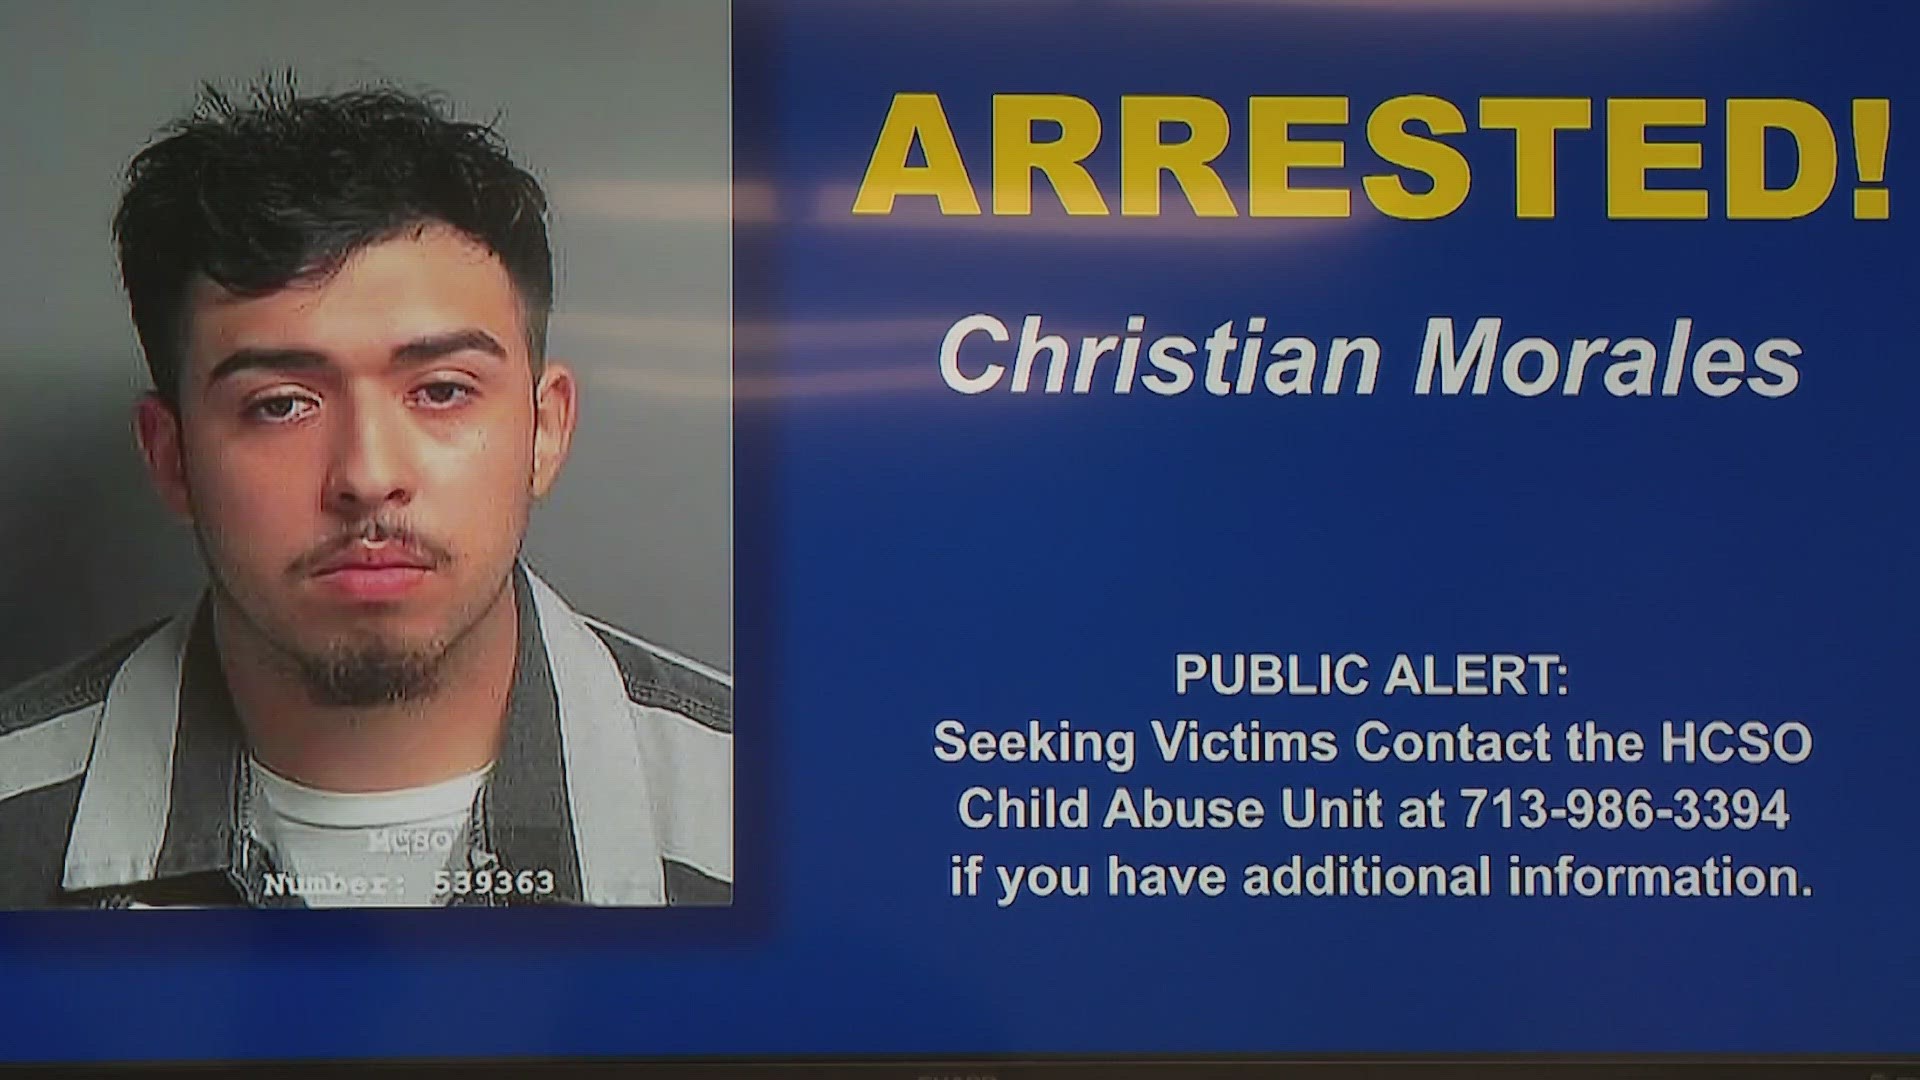 The sheriff called Christian Morales a dangerous predator.